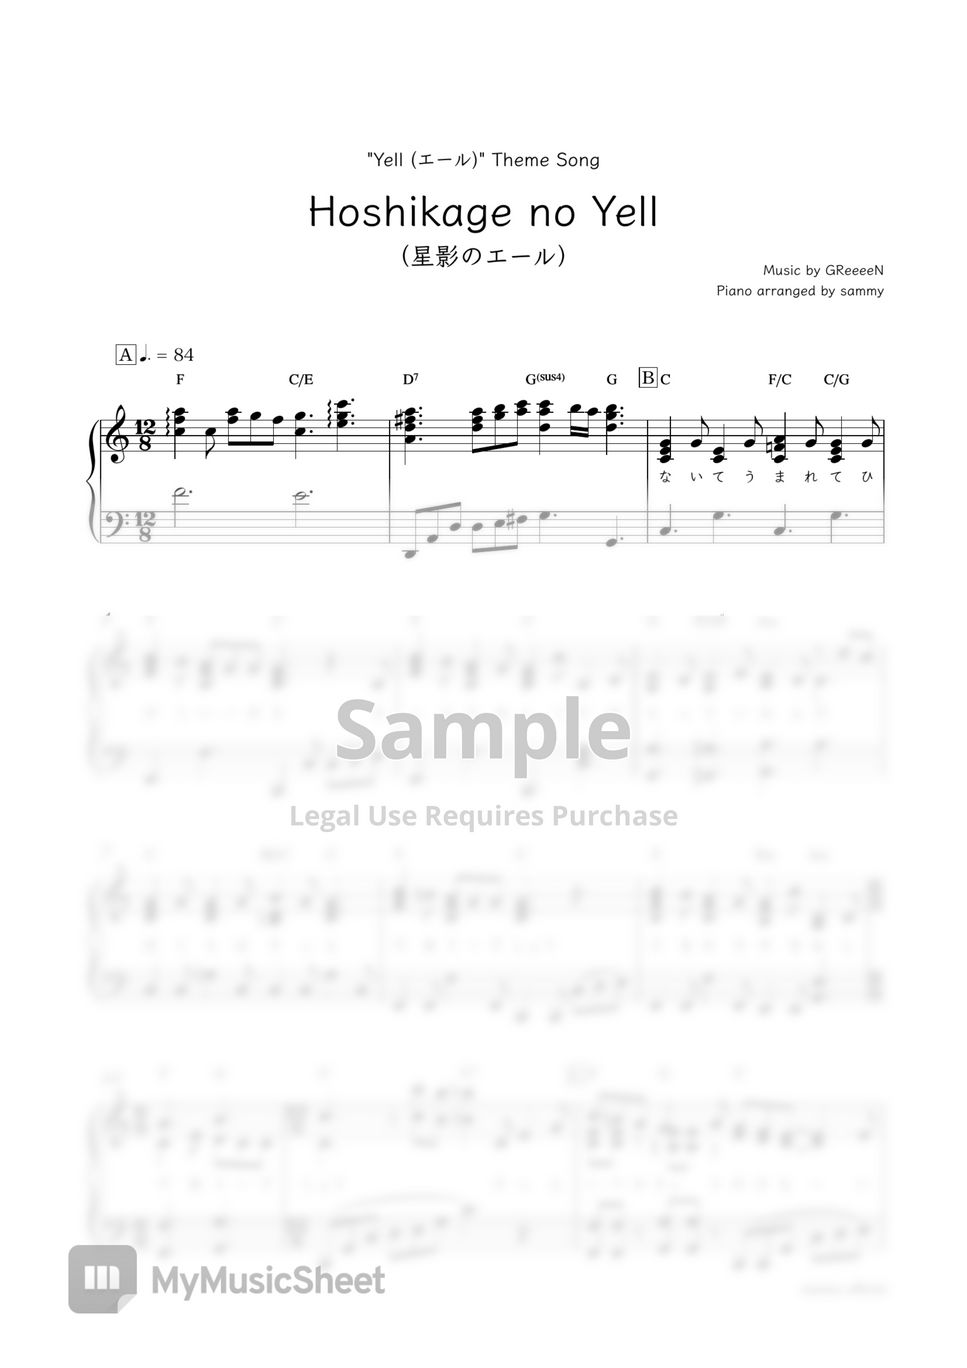 GReeeeN - Hoshikage no Yell by sammy